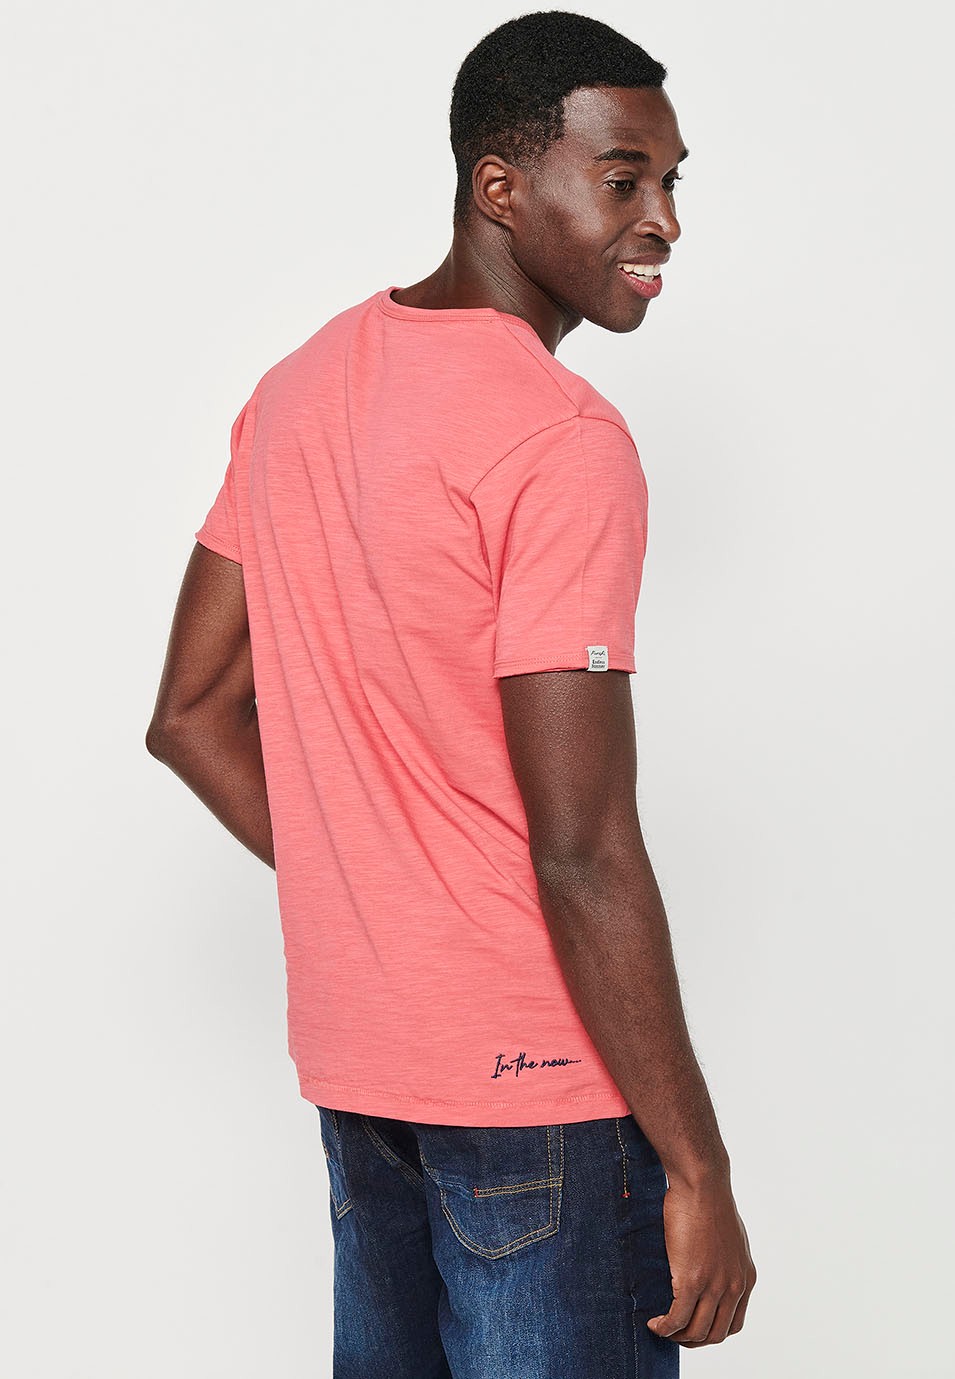 Basic short-sleeved cotton T-shirt, V-neck with button, pink color for men 1